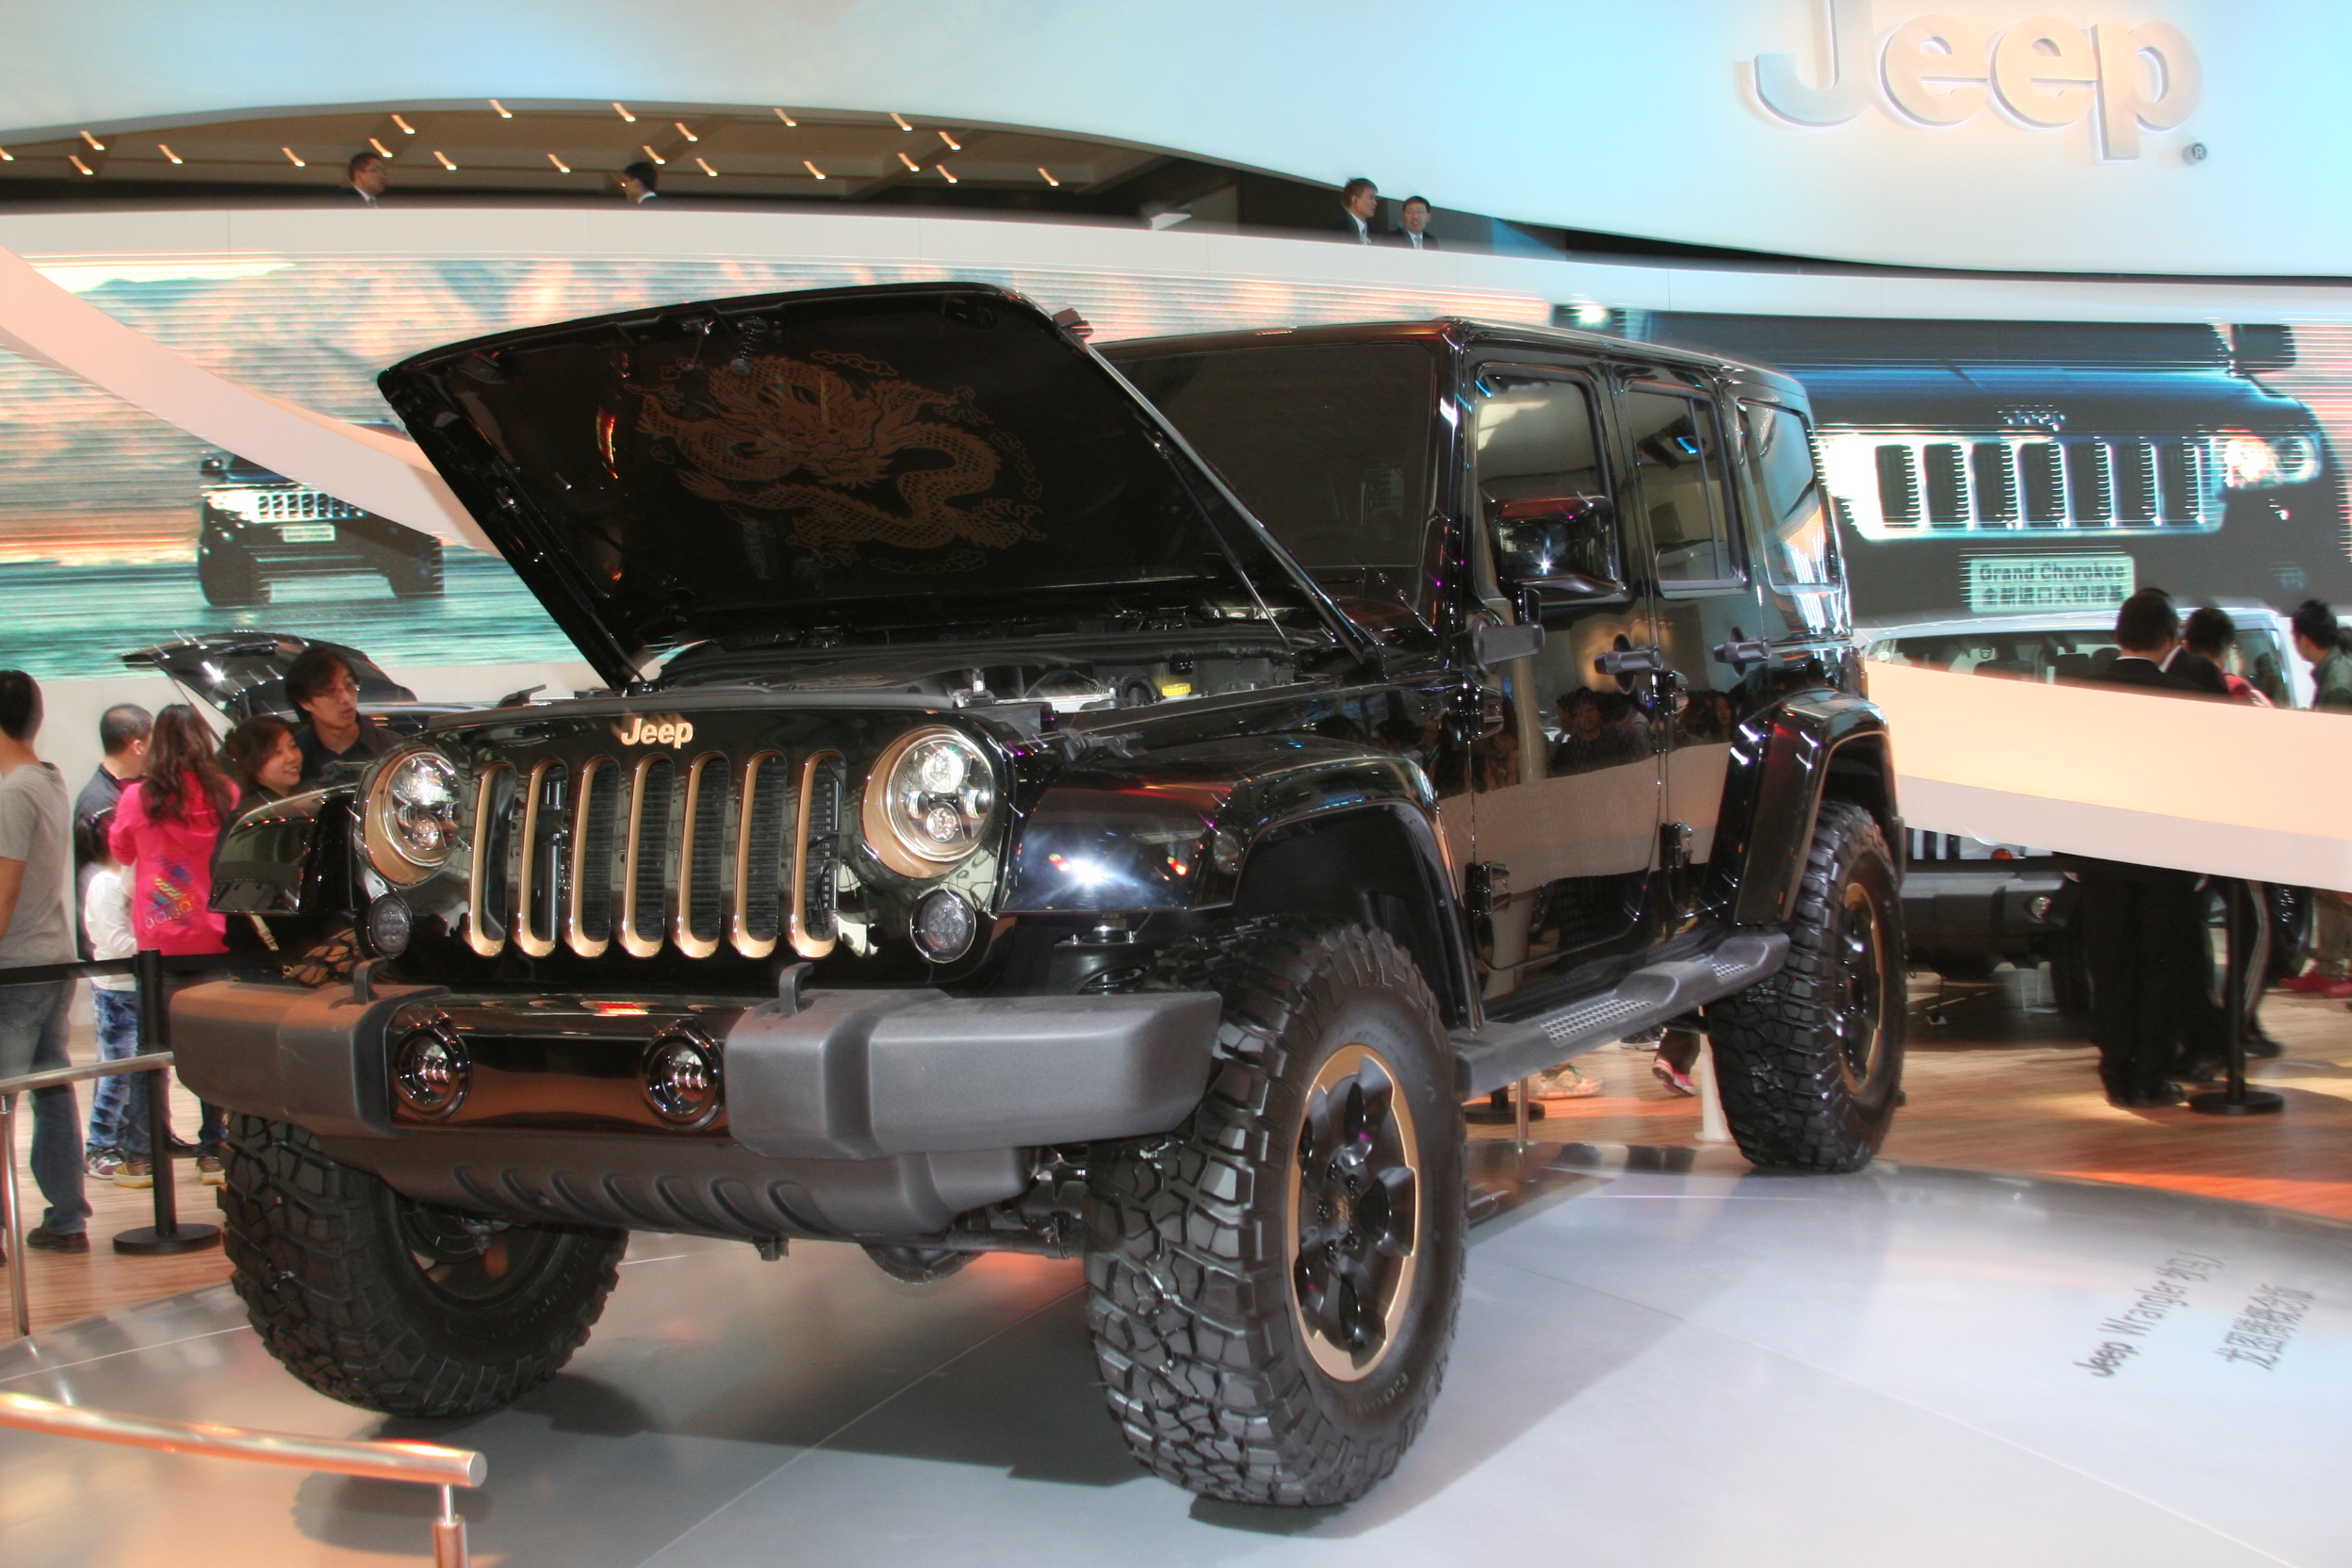 Jeep Wrangler Dragon at Beijing Motor Show (北京国际汽车展览会) | SondAuto's Blog